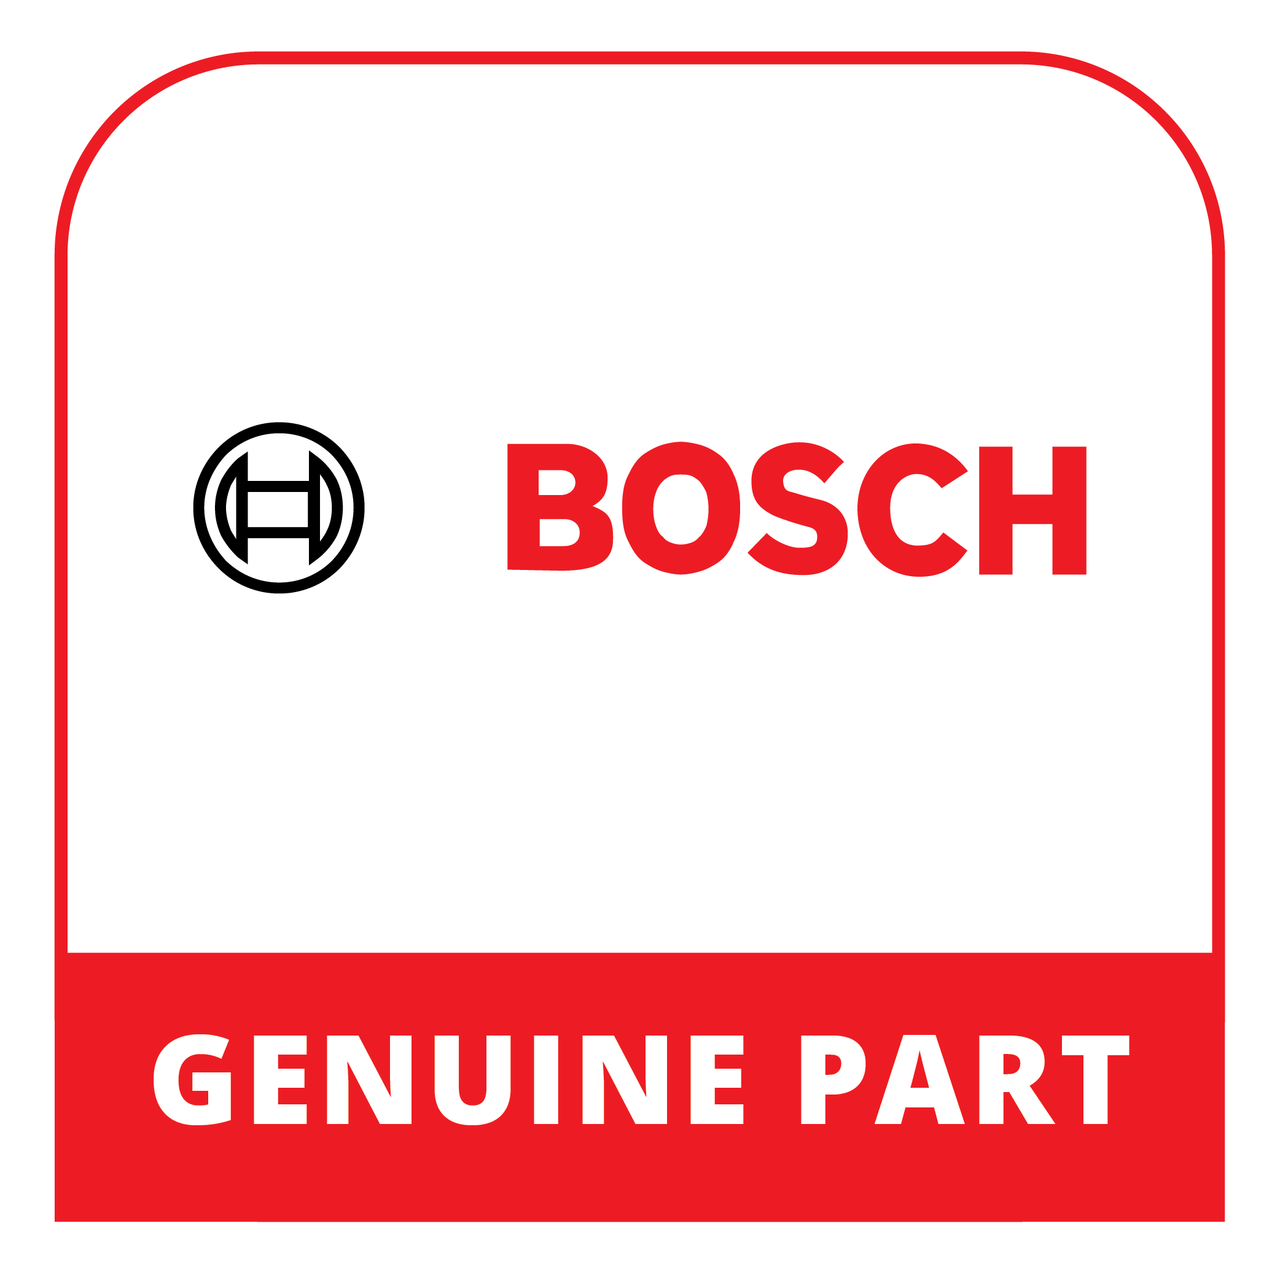 Bosch (Thermador) 10016074 - Knob - Genuine Bosch (Thermador) Part